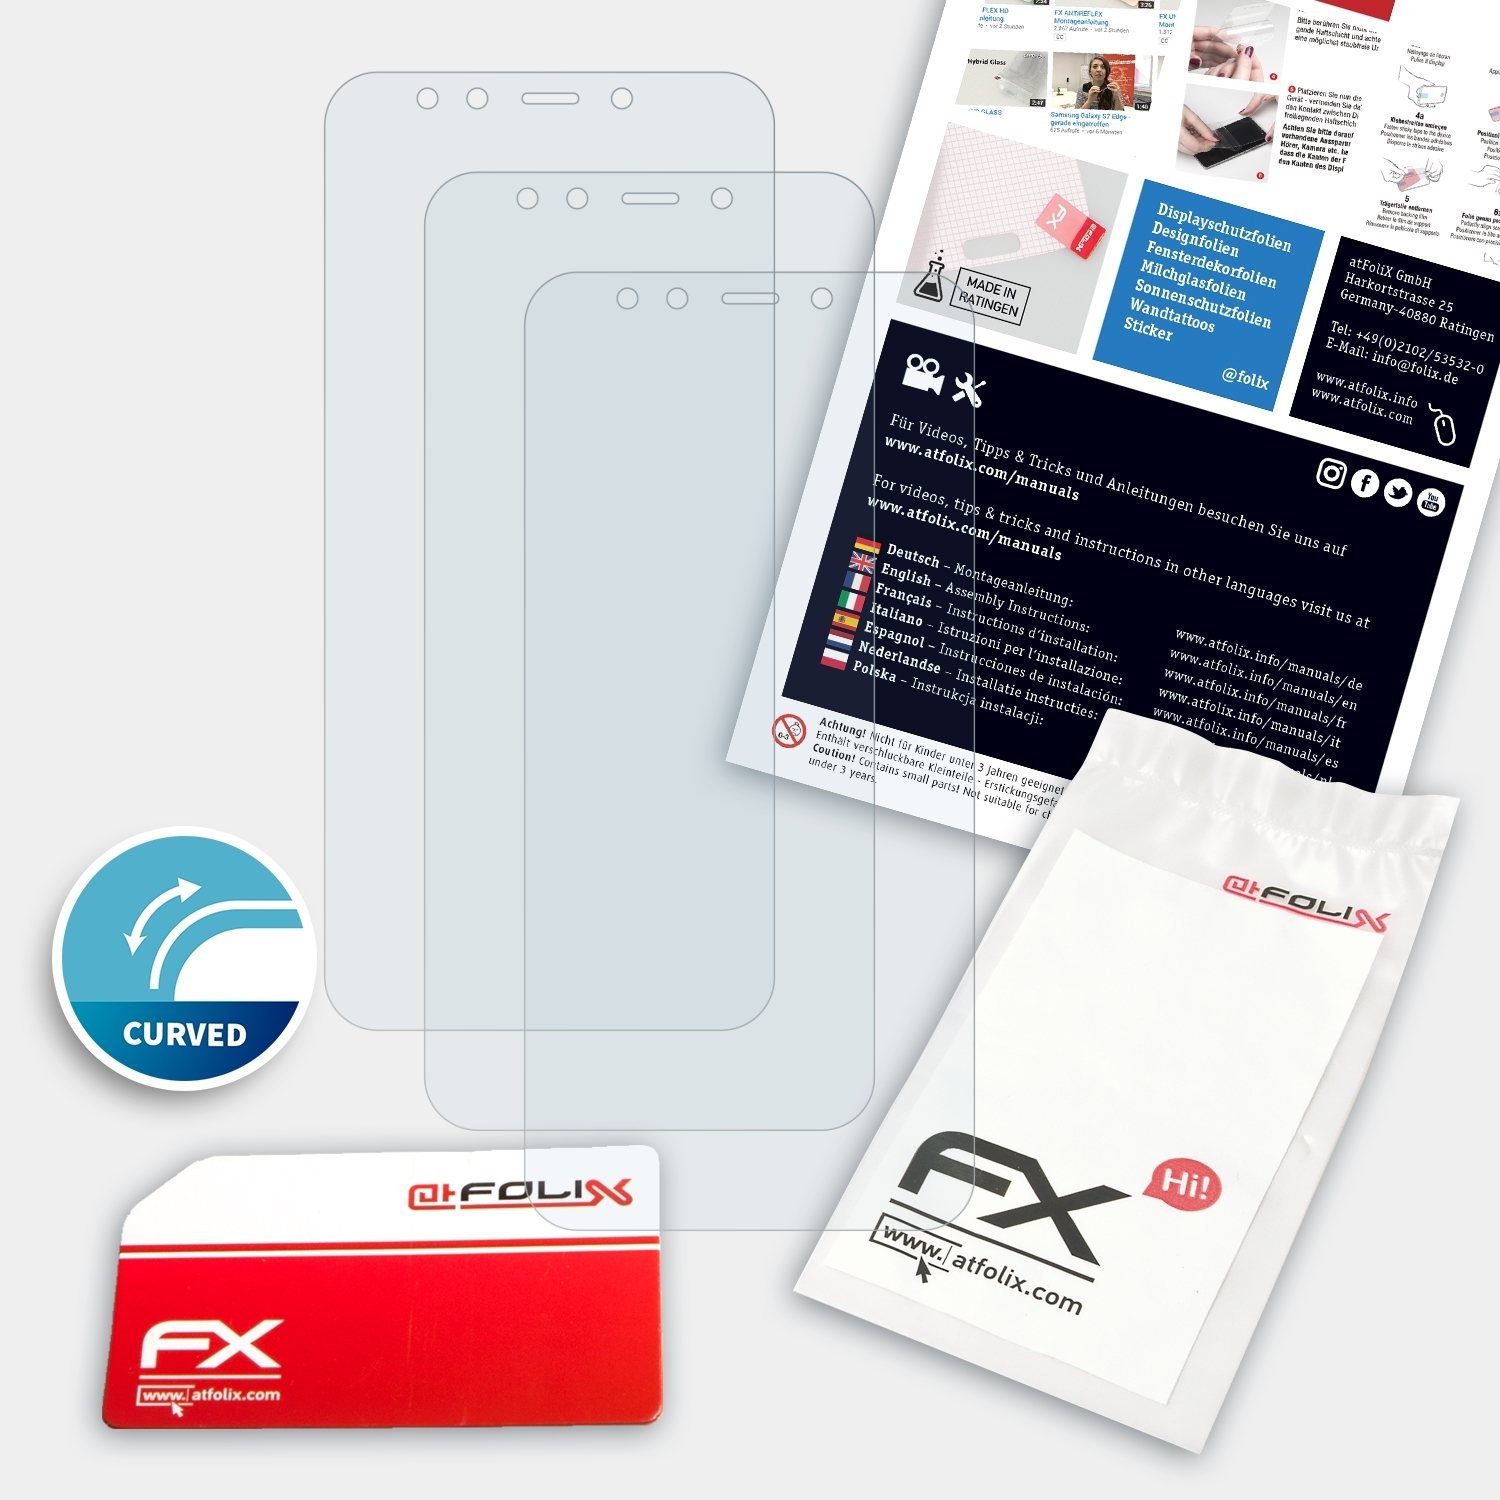 ATFOLIX FX-ActiFleX Mi A2) Xiaomi 3x Displayschutz(für